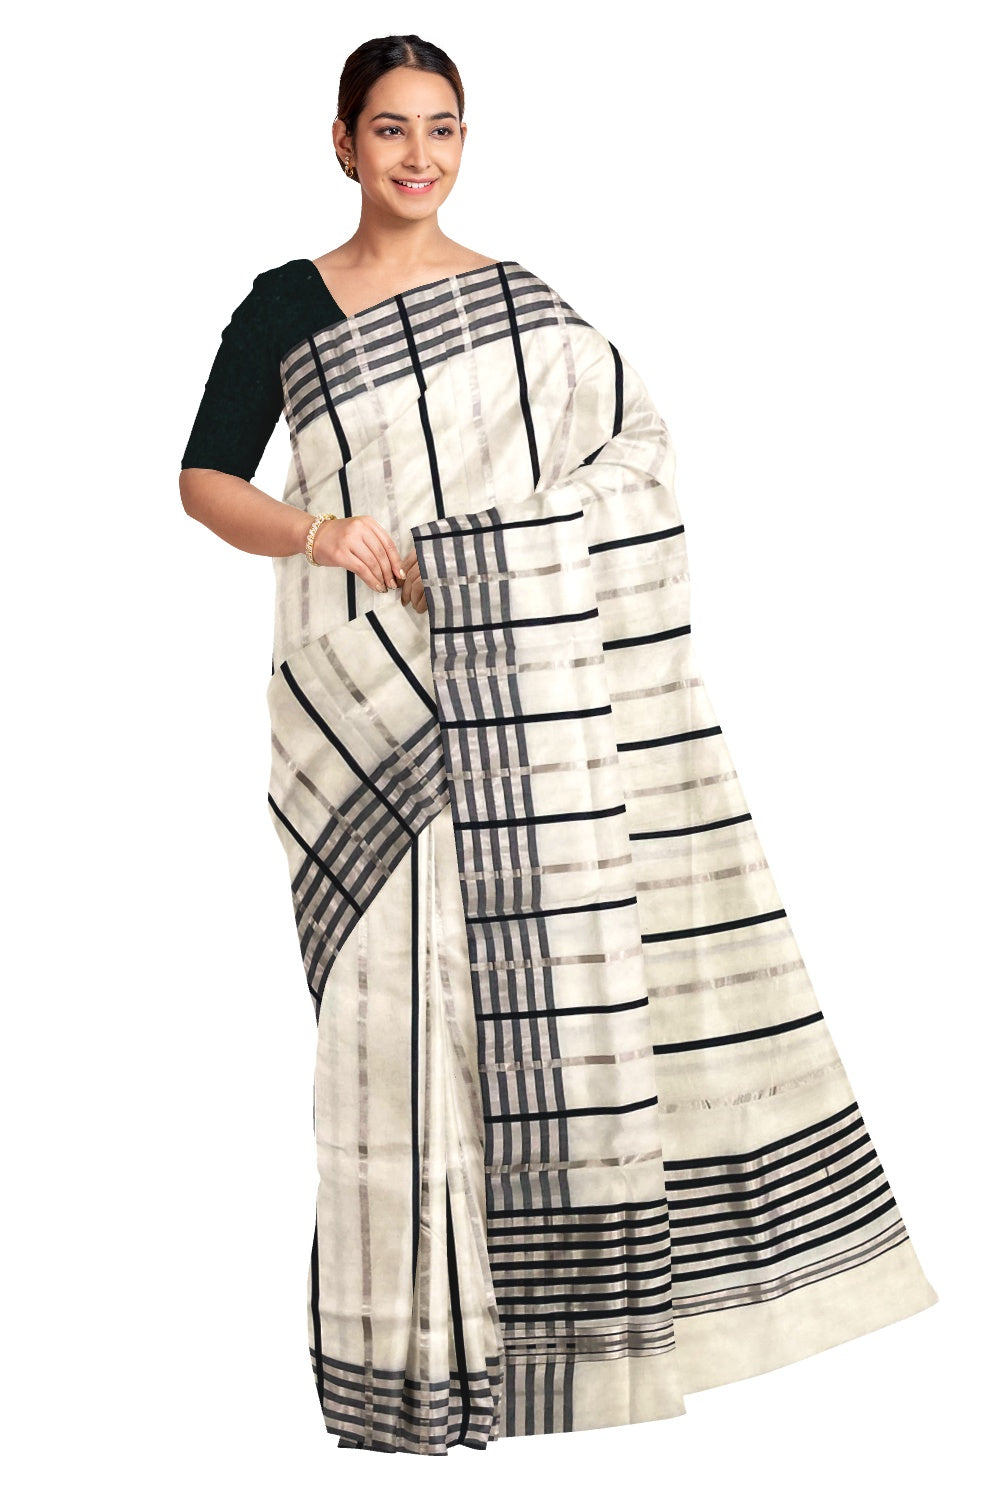 Southloom Premium Handloom Saree with Silver Kasvau and Black Lines Across Body and Lines Design Pallu